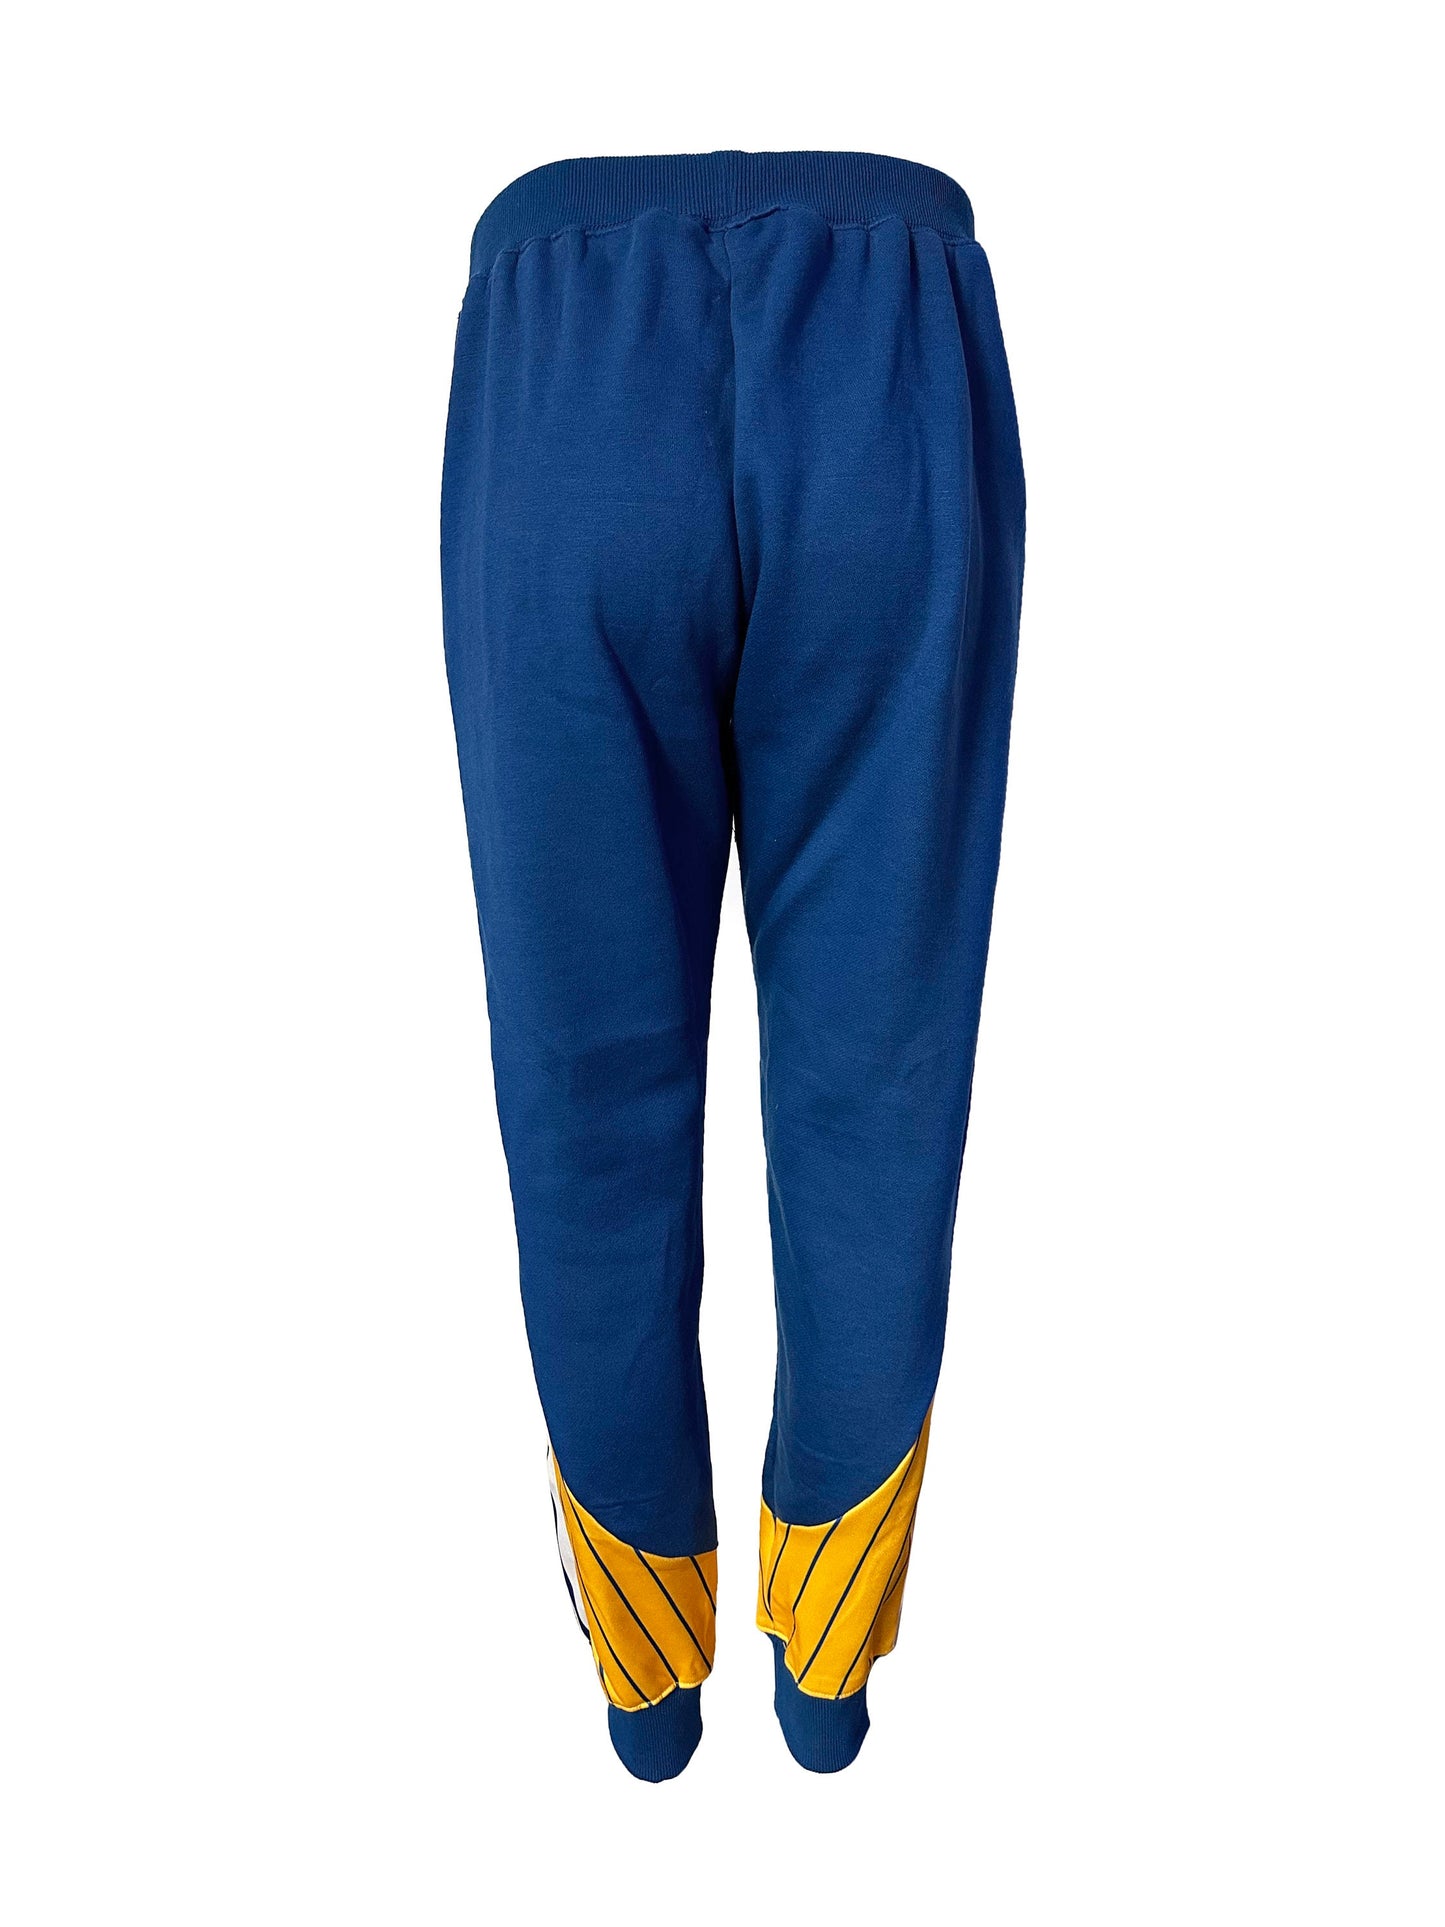 Men's Side Striped Fleece Jogger Pant (Blue with Gold / Blue / White Stripes)